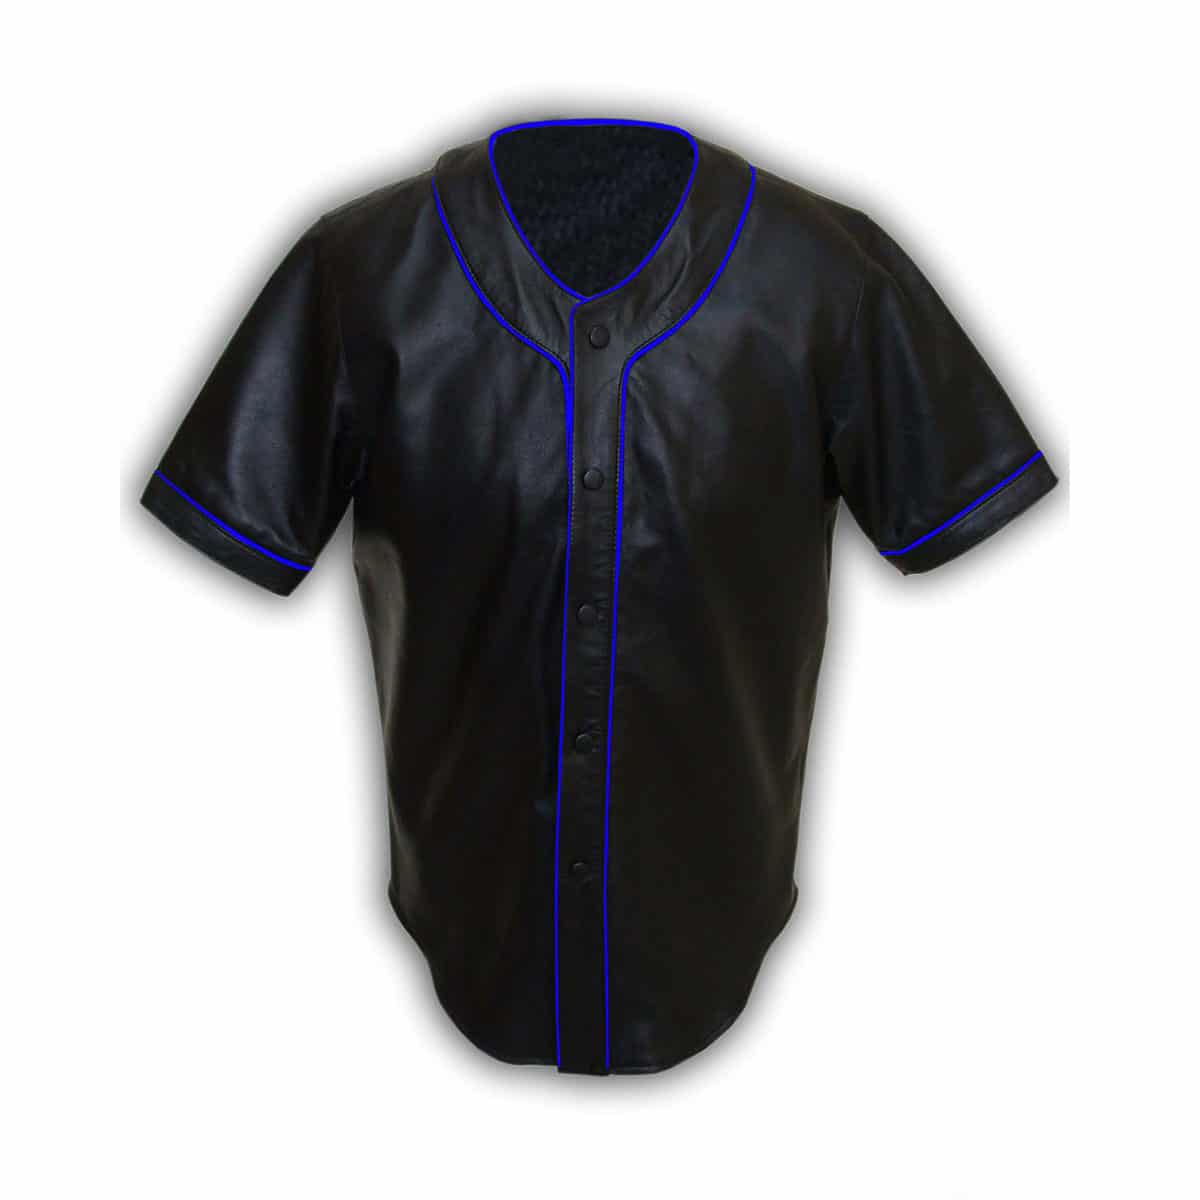 Mens Base Ball Jersey Style Shirt Soft Sheep Black Leather - BBS1